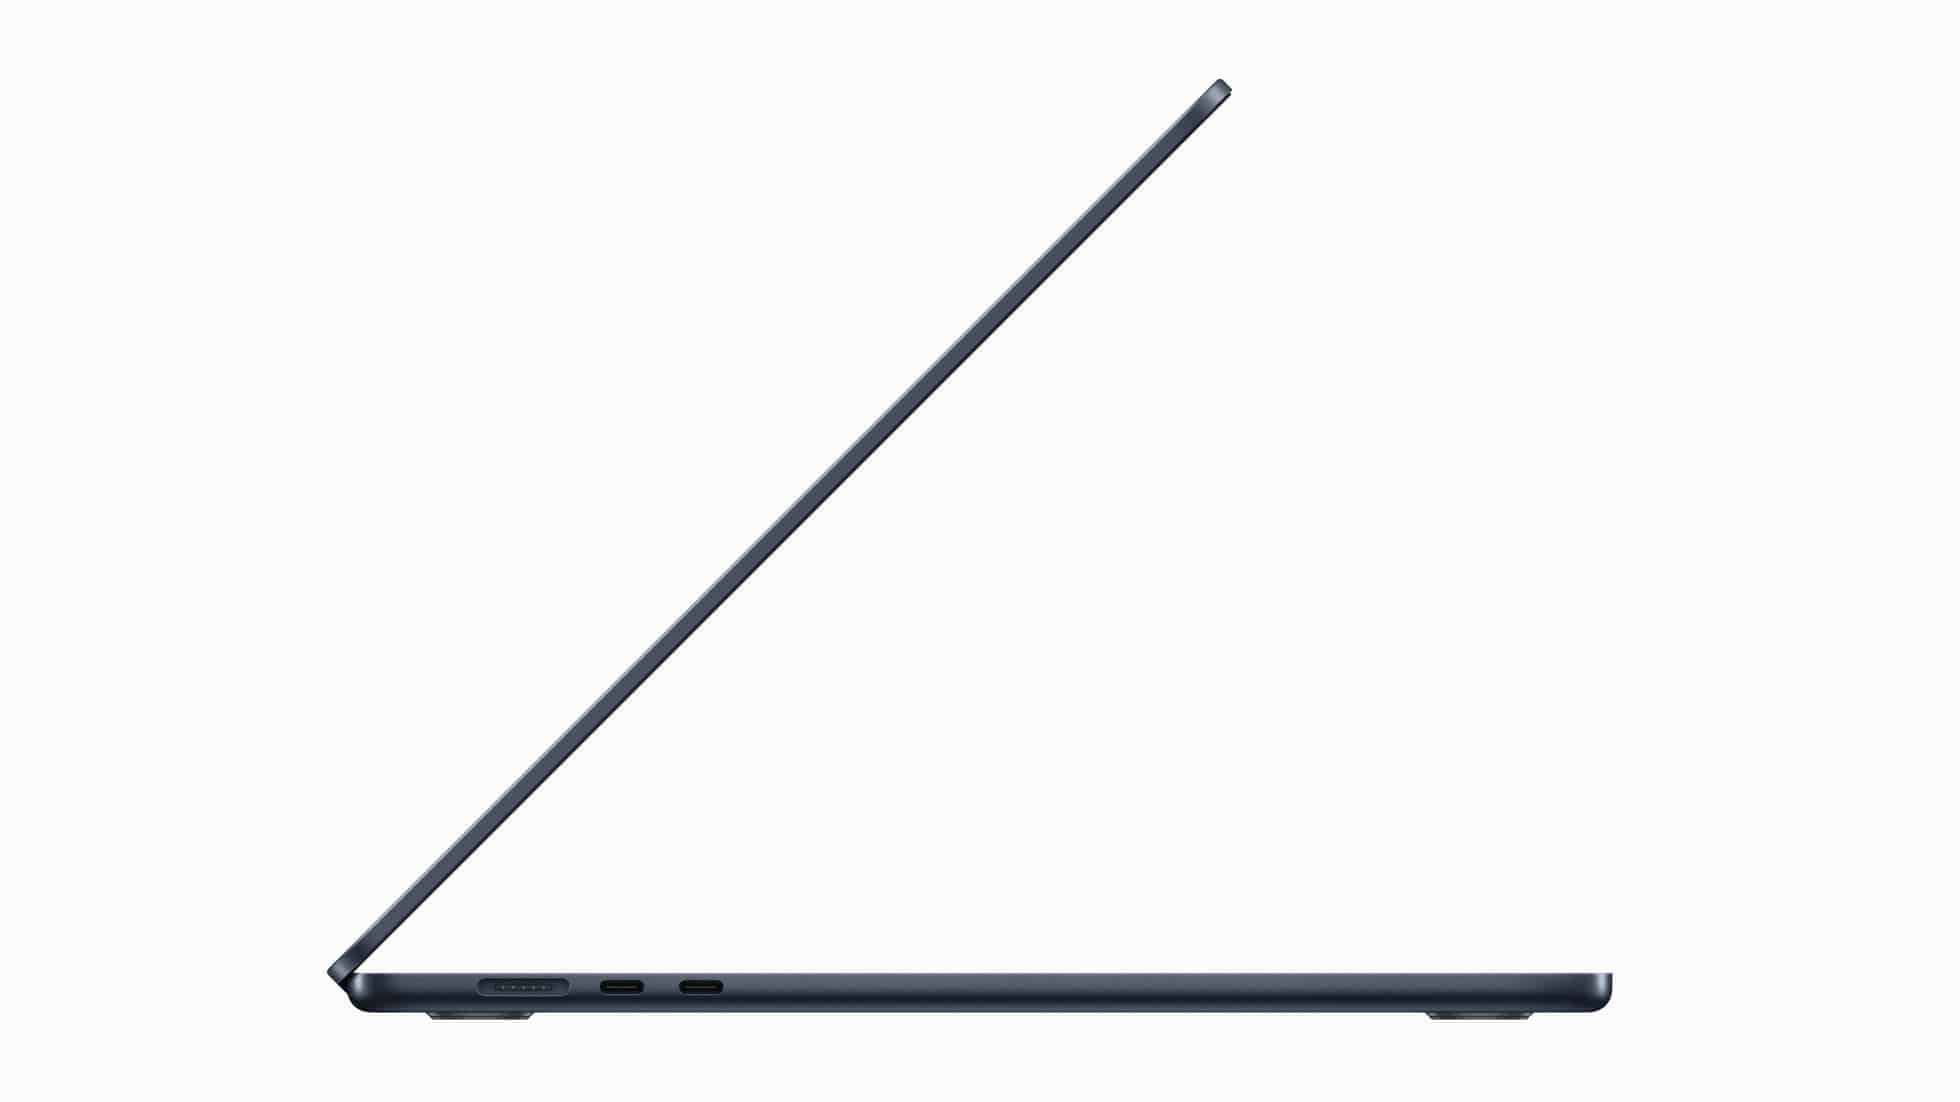 Design of 15-inch MacBook Air